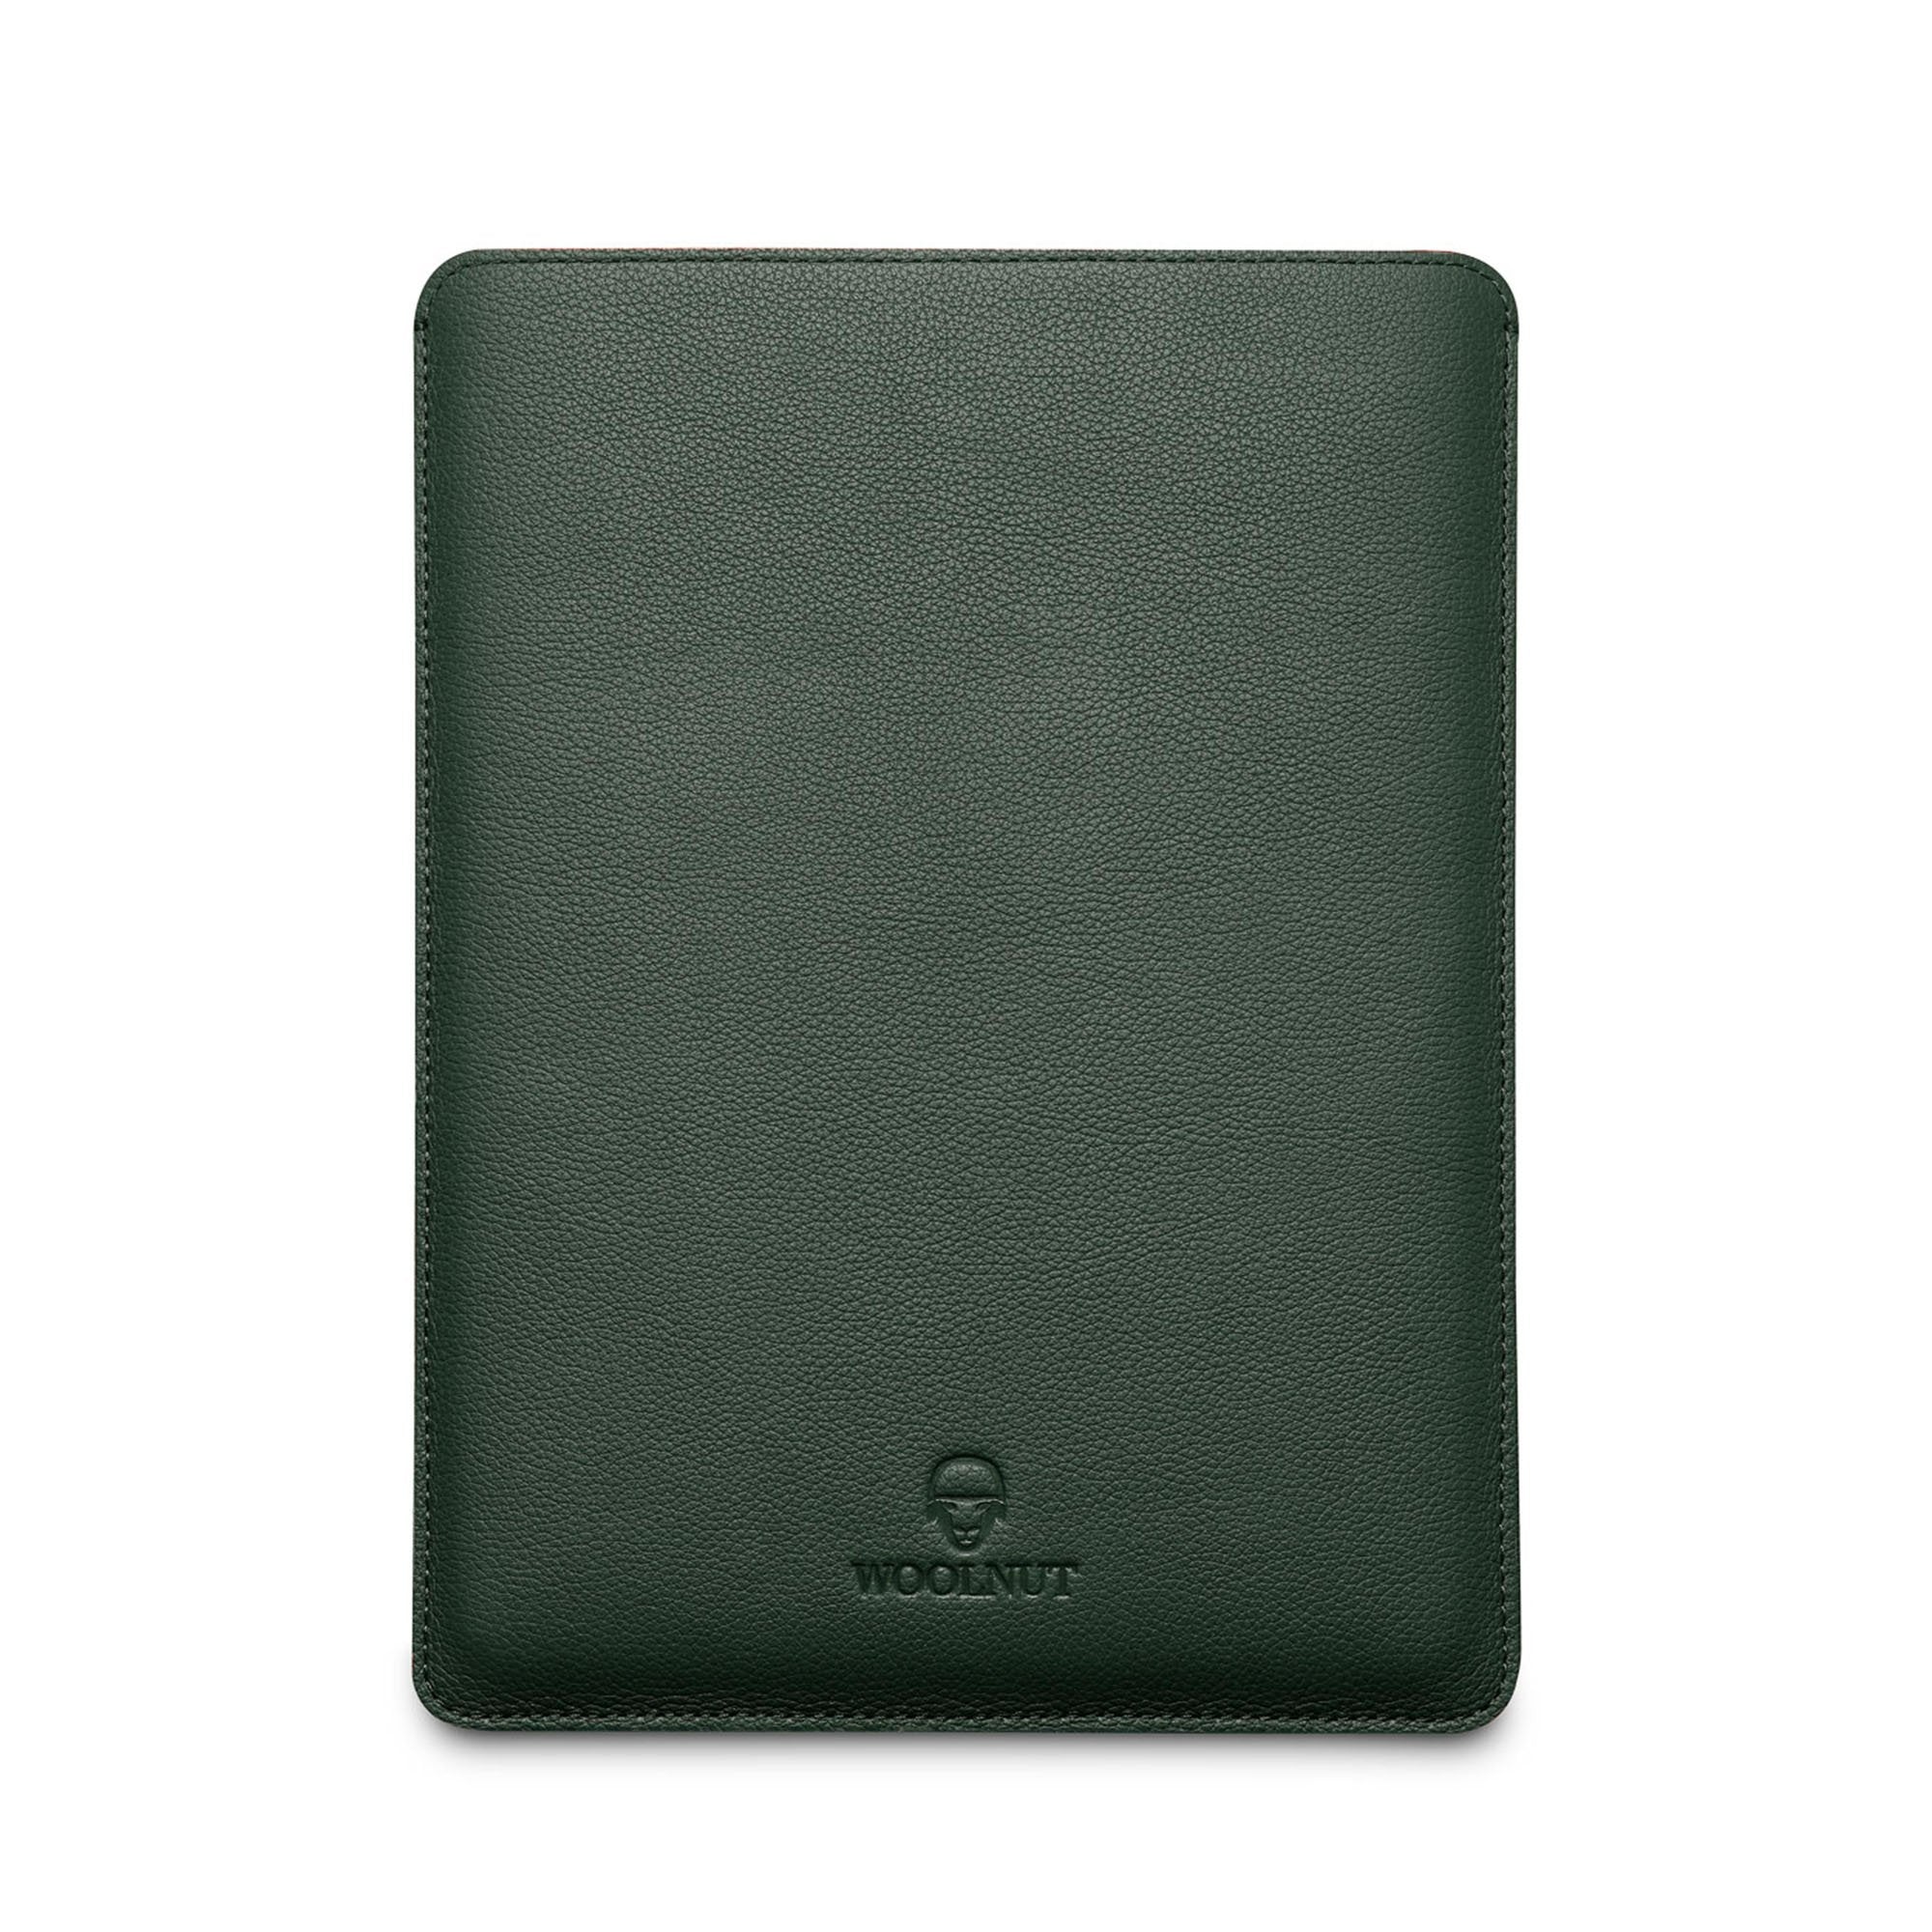 Woolnut Leather Sleeve for MacBook Air MacBook Pro | Brookstone